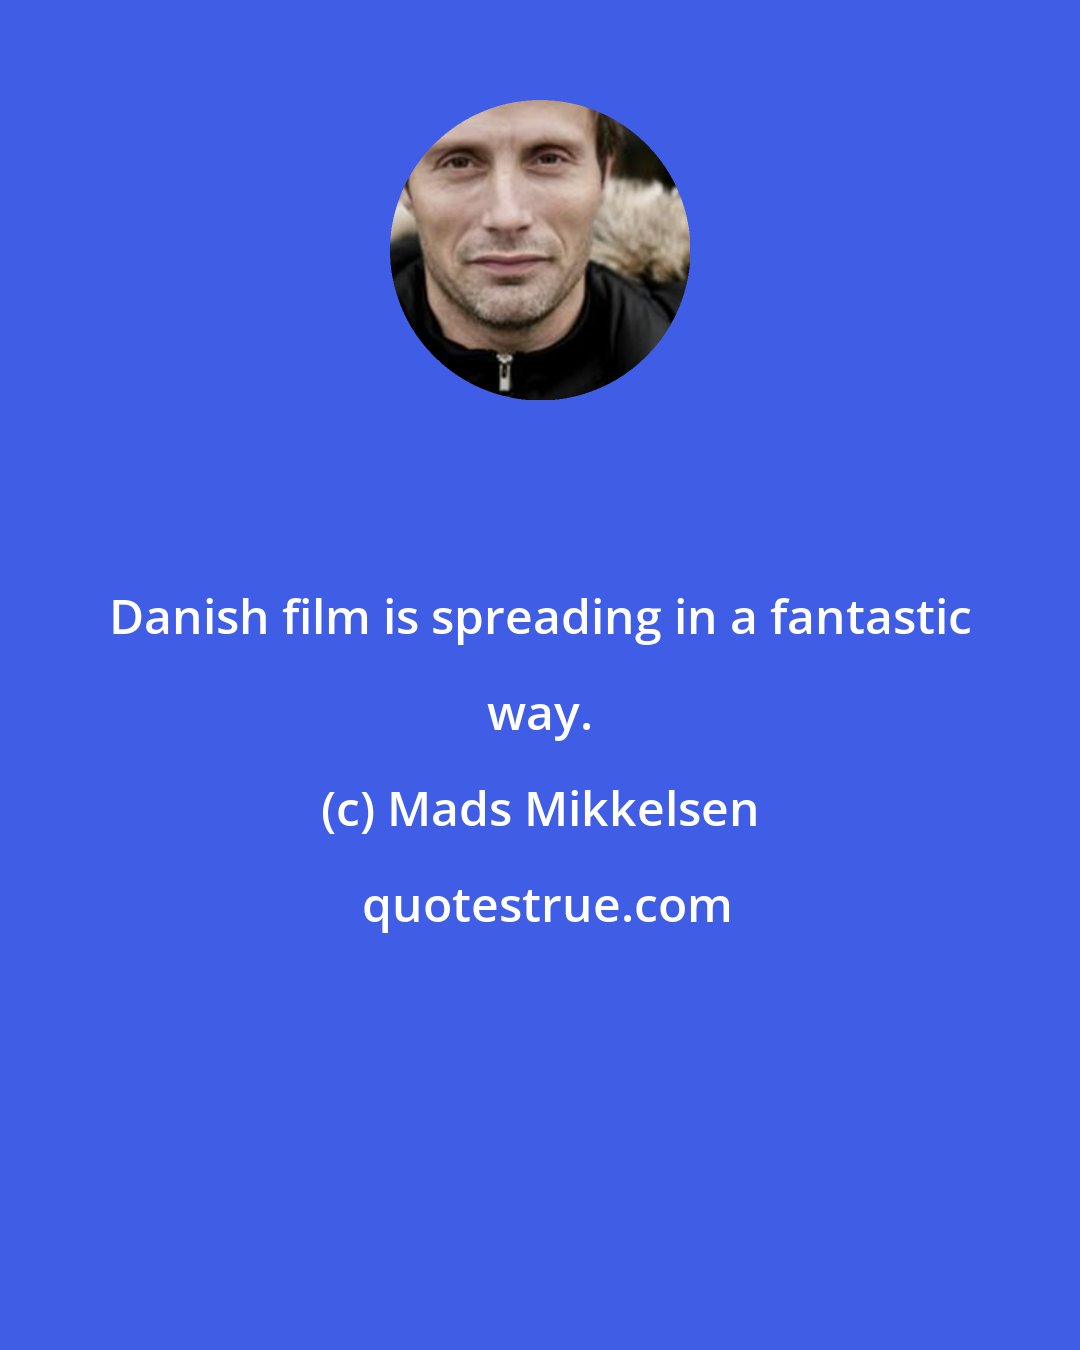 Mads Mikkelsen: Danish film is spreading in a fantastic way.